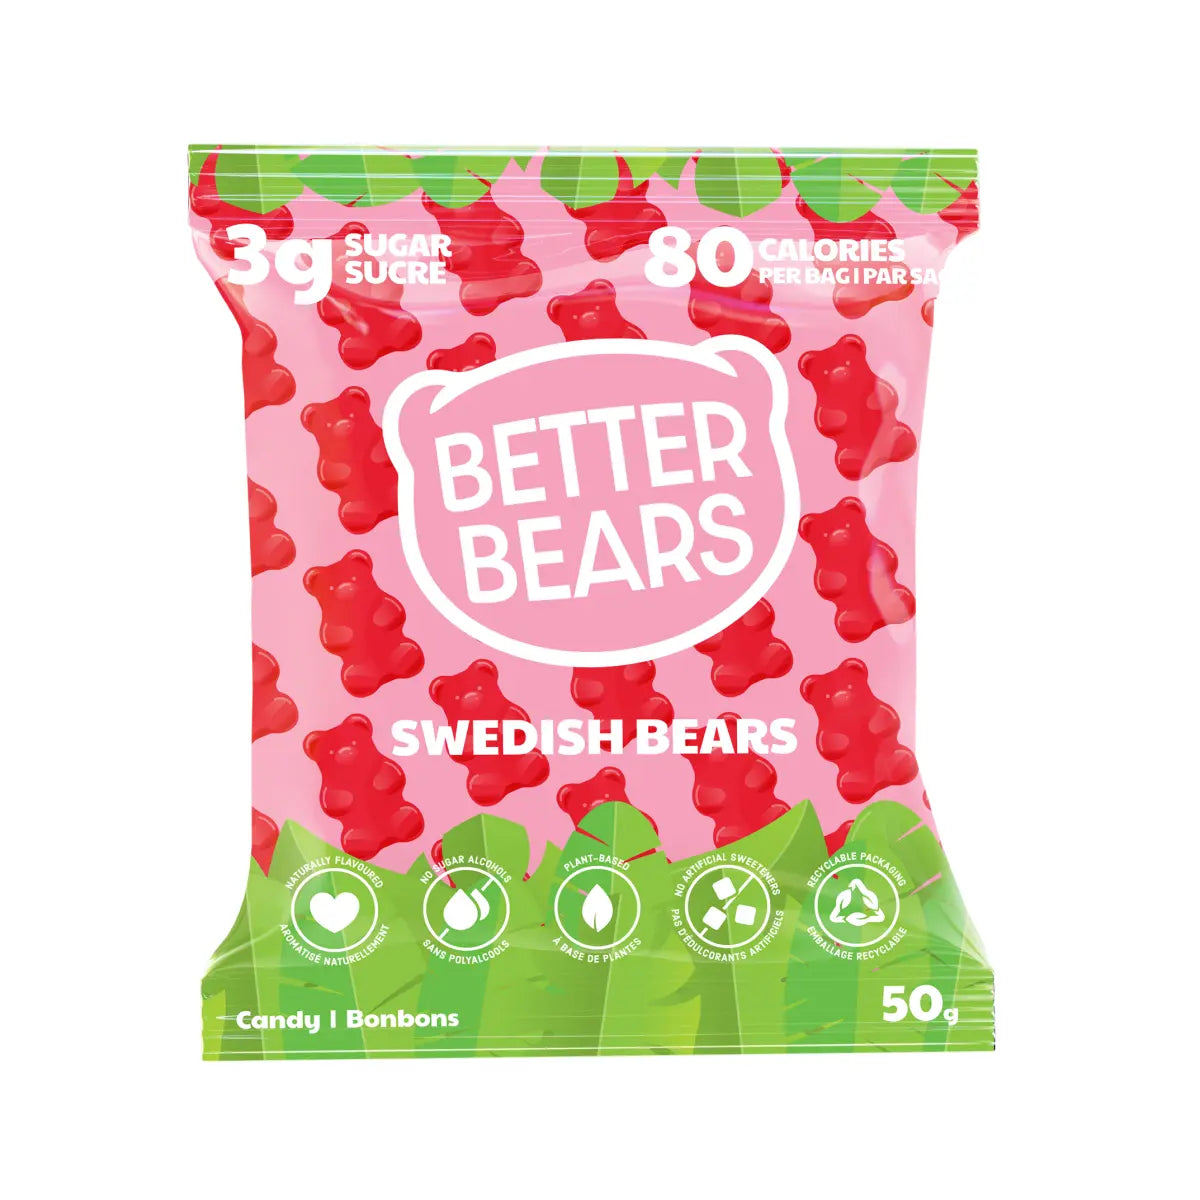 Better Bears Low Sugar Vegan Gummies (1 bag) Protein Snacks Swedish Bears Better Bears